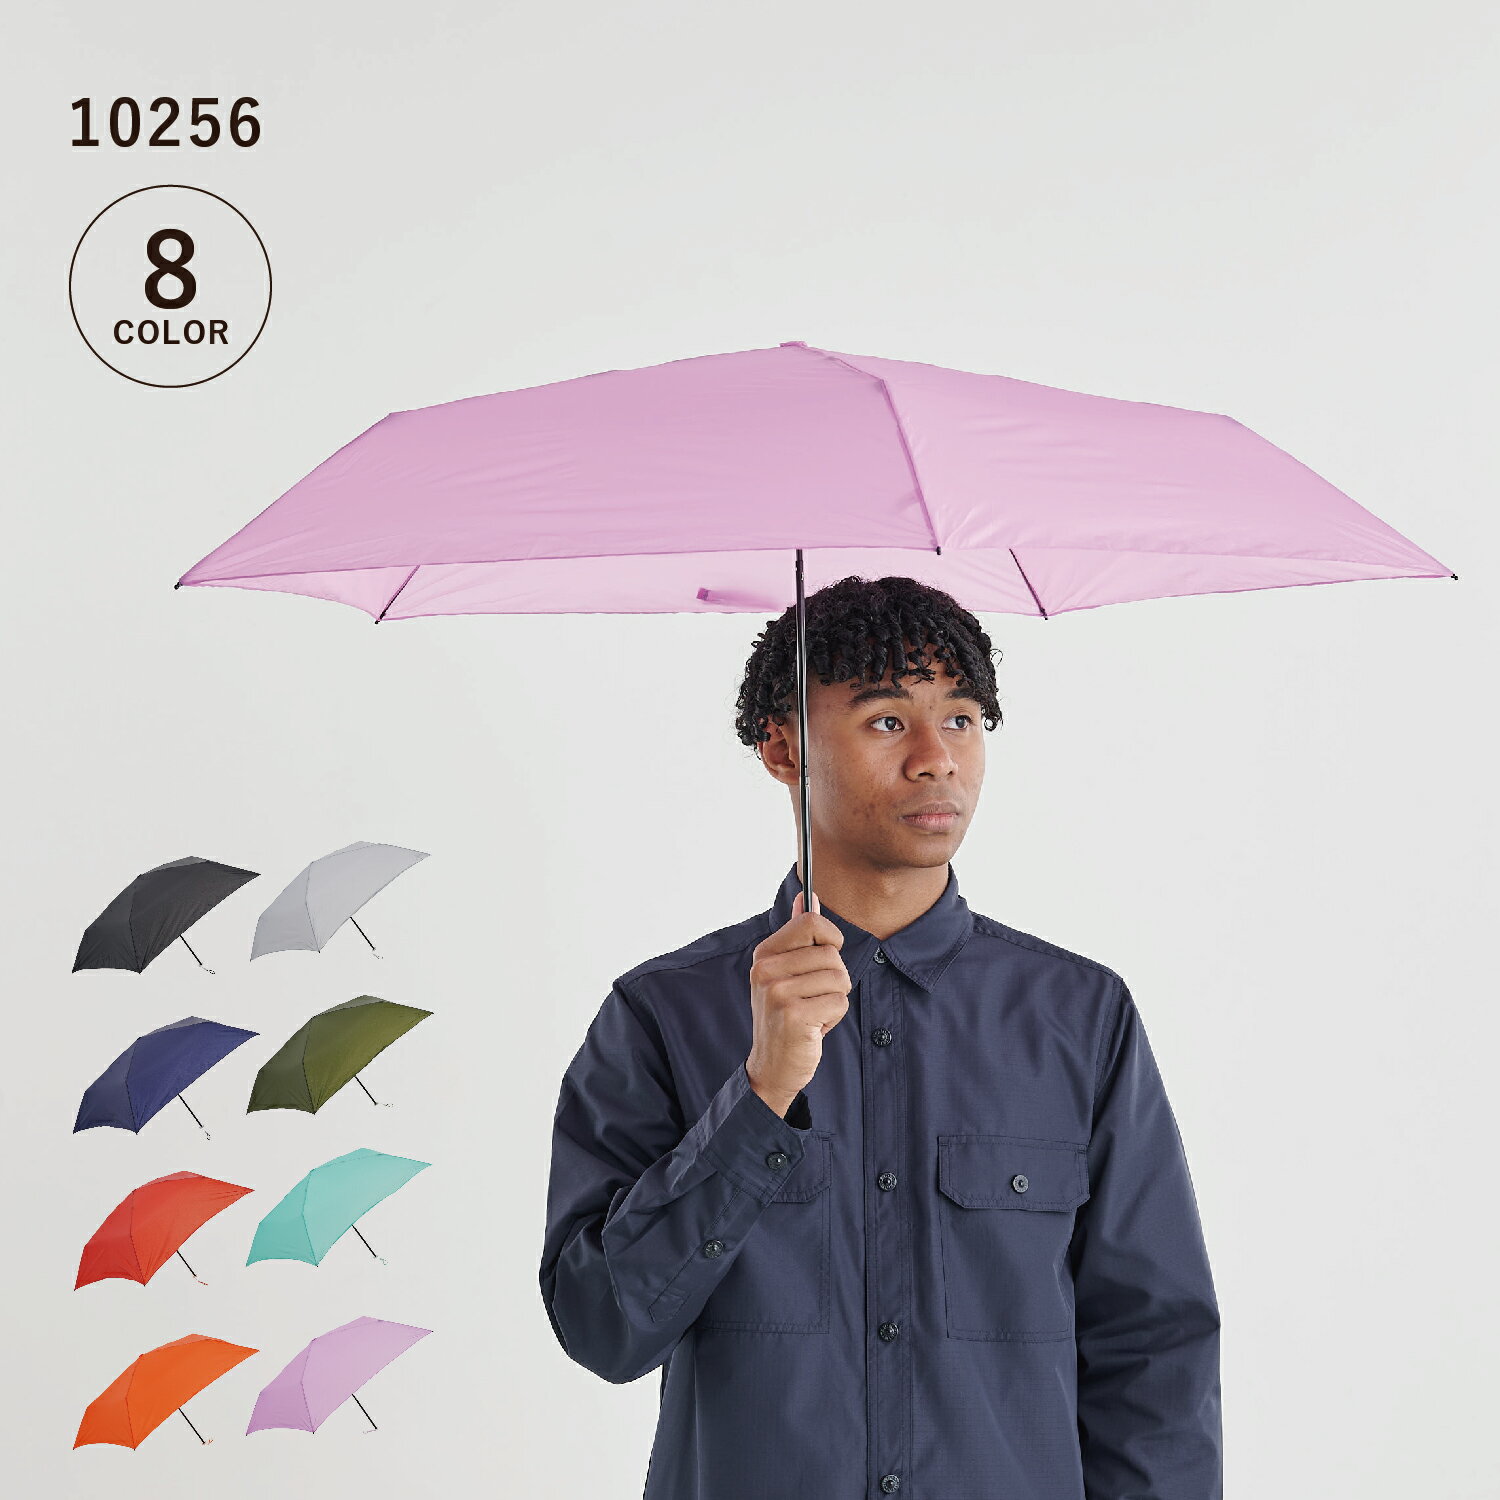 MAGICAL TECH プレーン55 マジカルテック 折りたたみ傘 軽量 雨傘 晴雨兼用 日傘 レディース 55cm UVカット 紫外線対策 スリム コンパクト 10256